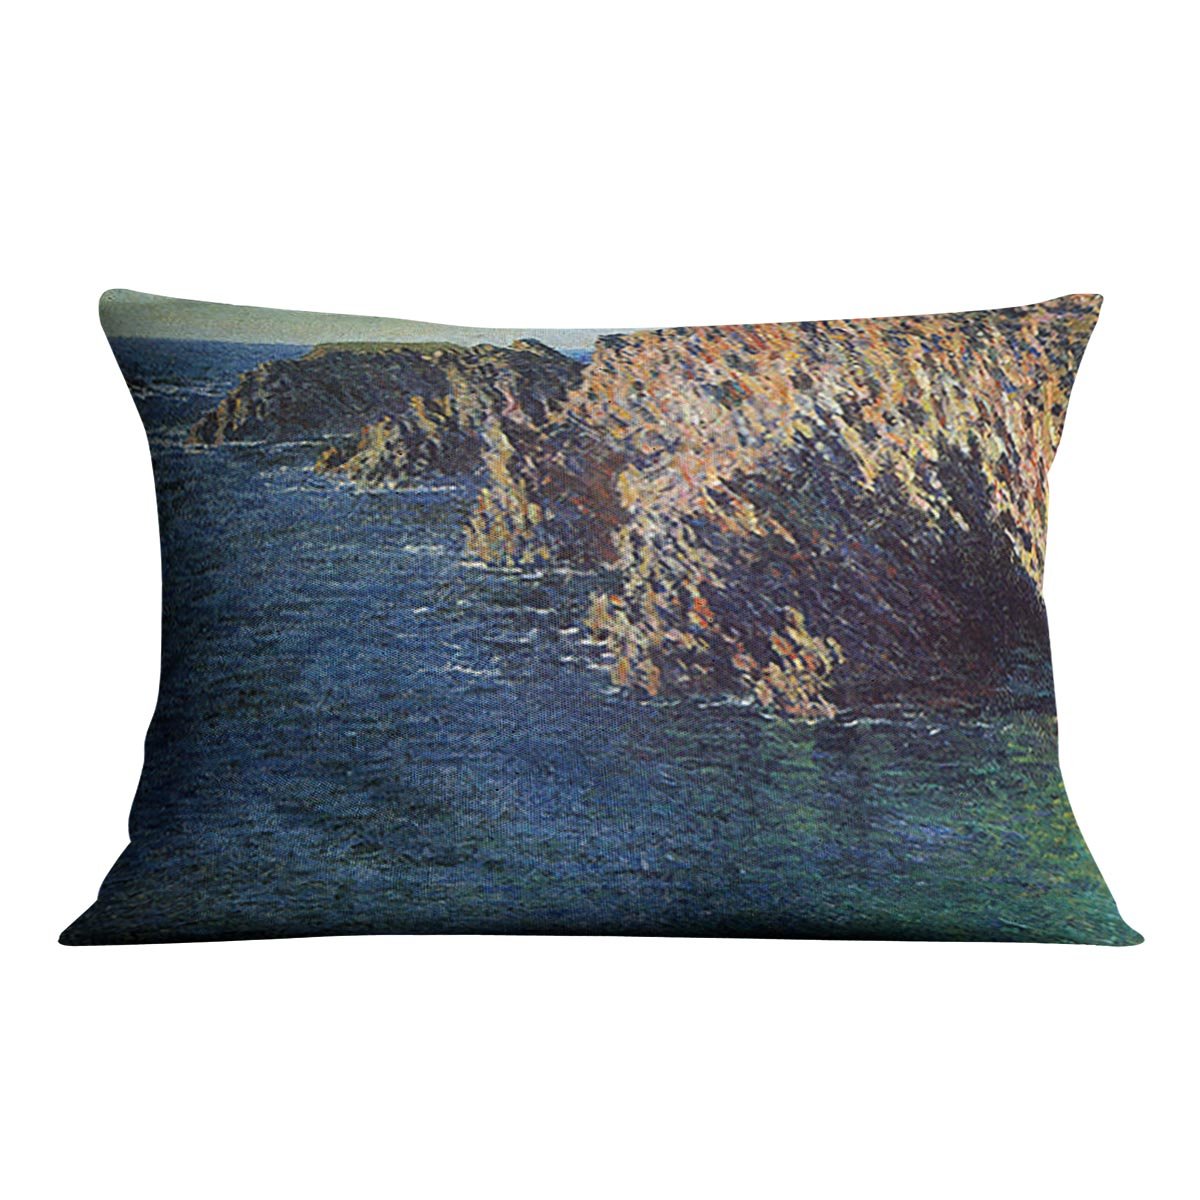 Port Domois by Monet Throw Pillow